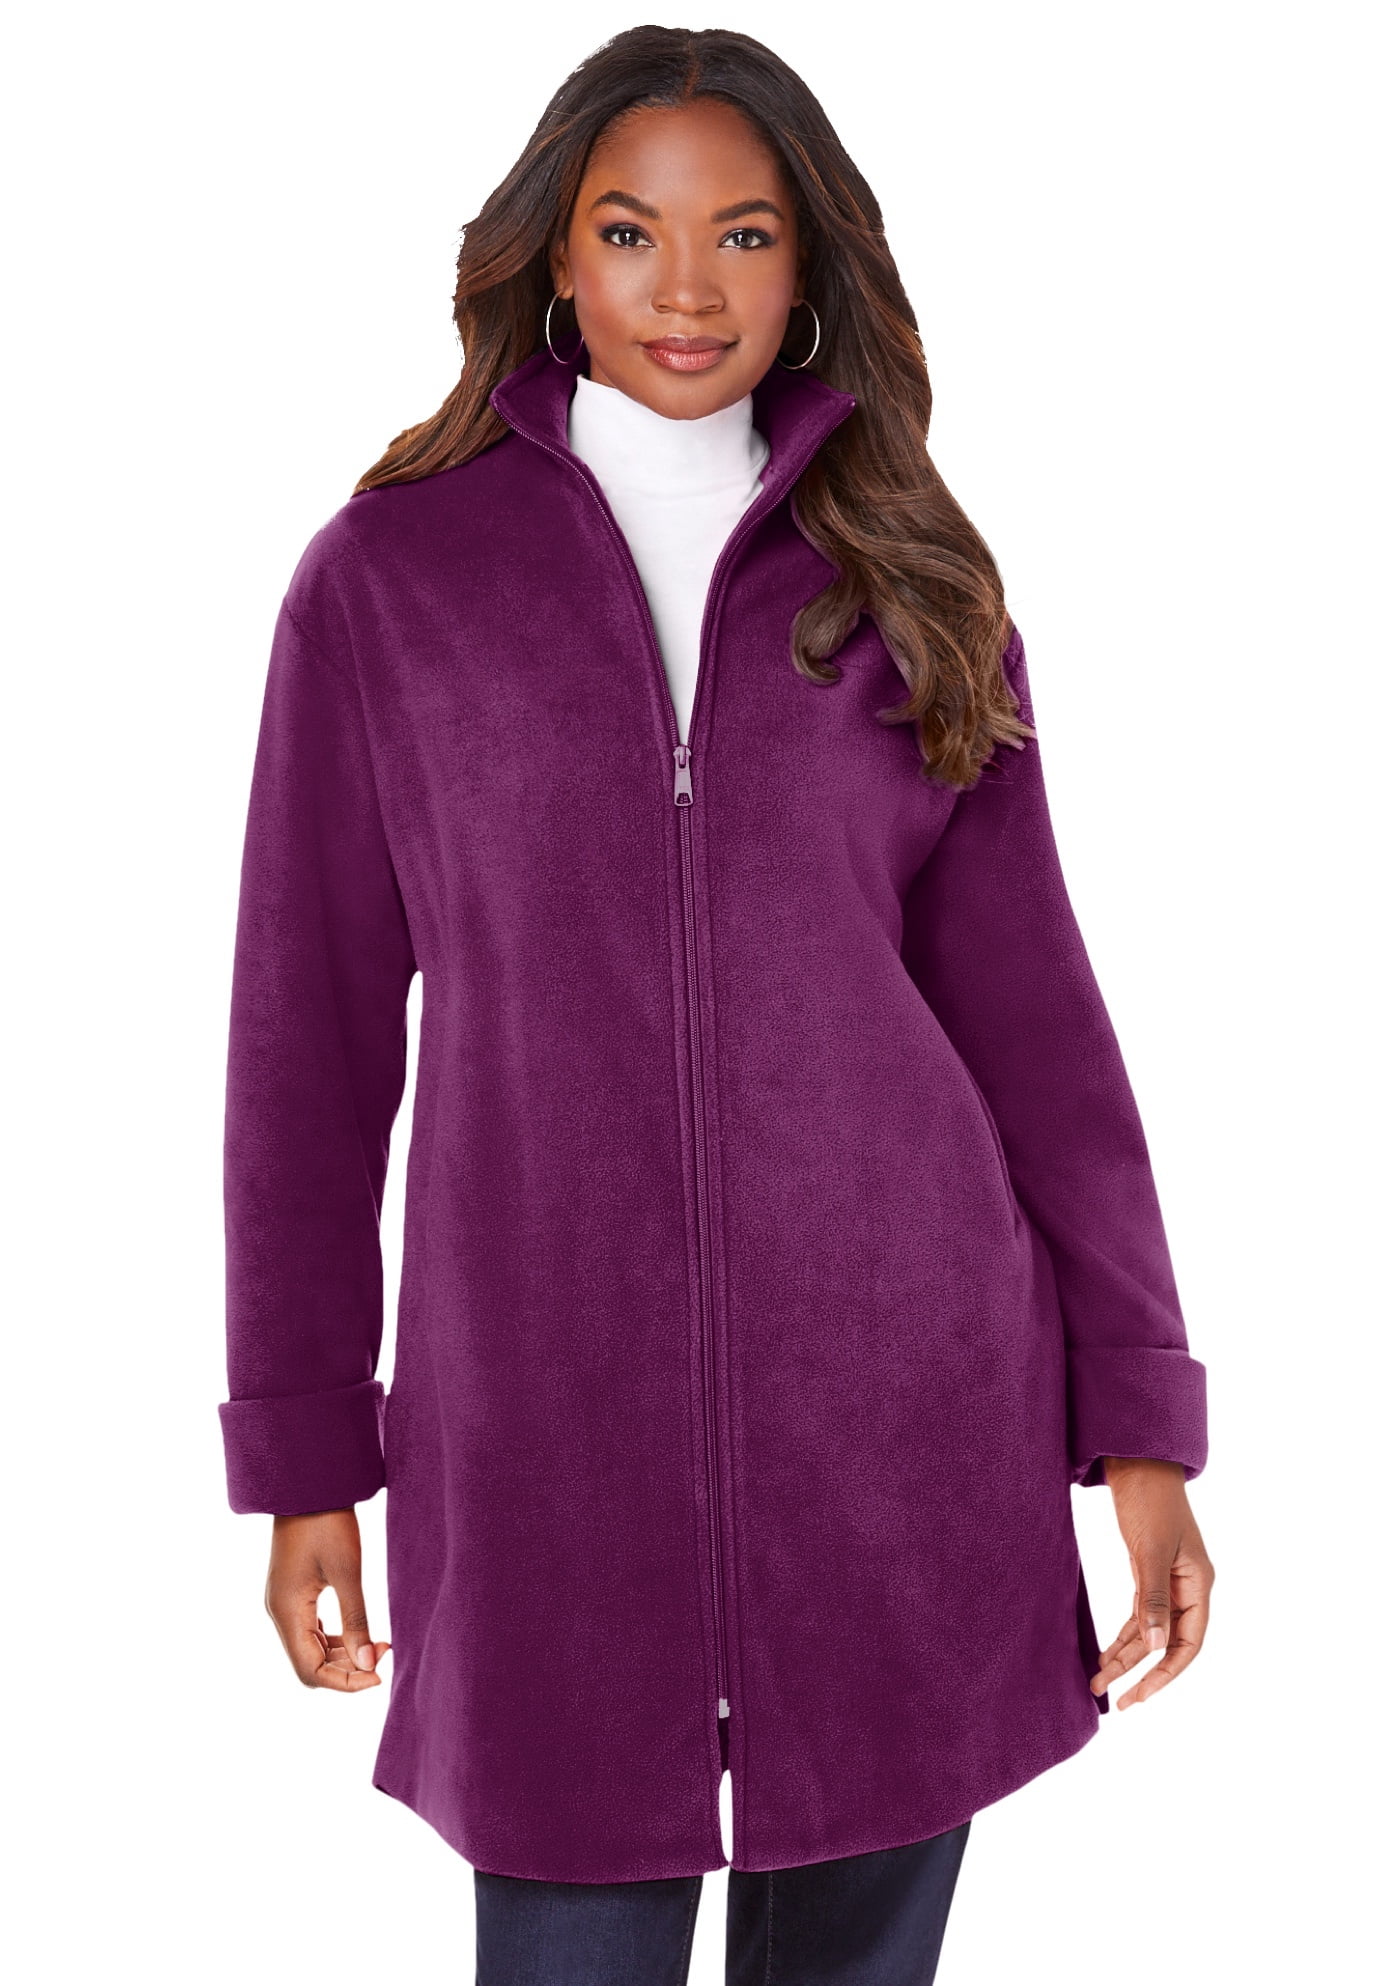 Roaman's Women's Plus Size Plush Fleece Driving Coat Jacket 